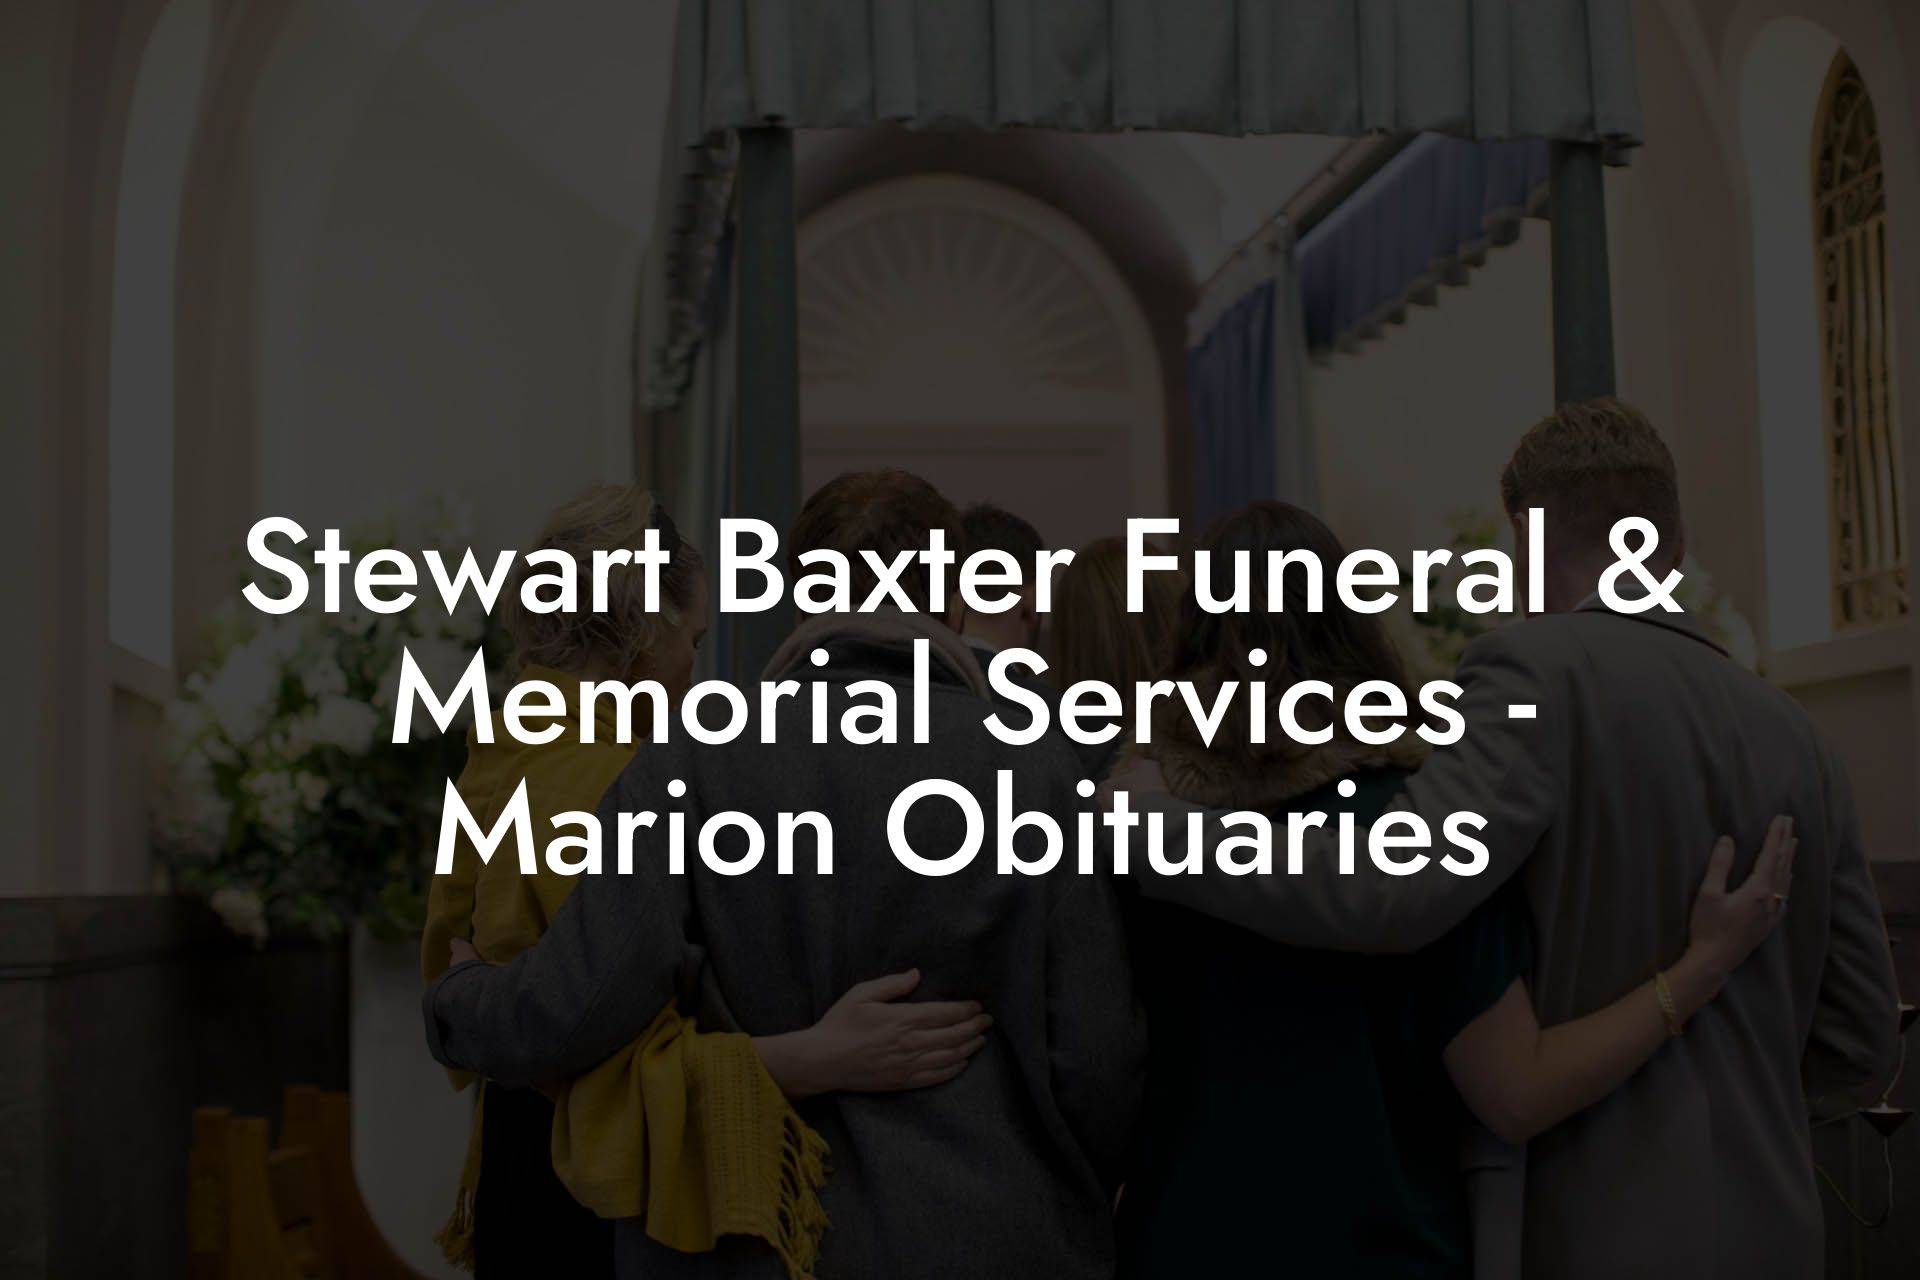 Stewart Baxter Funeral & Memorial Services - Marion Obituaries